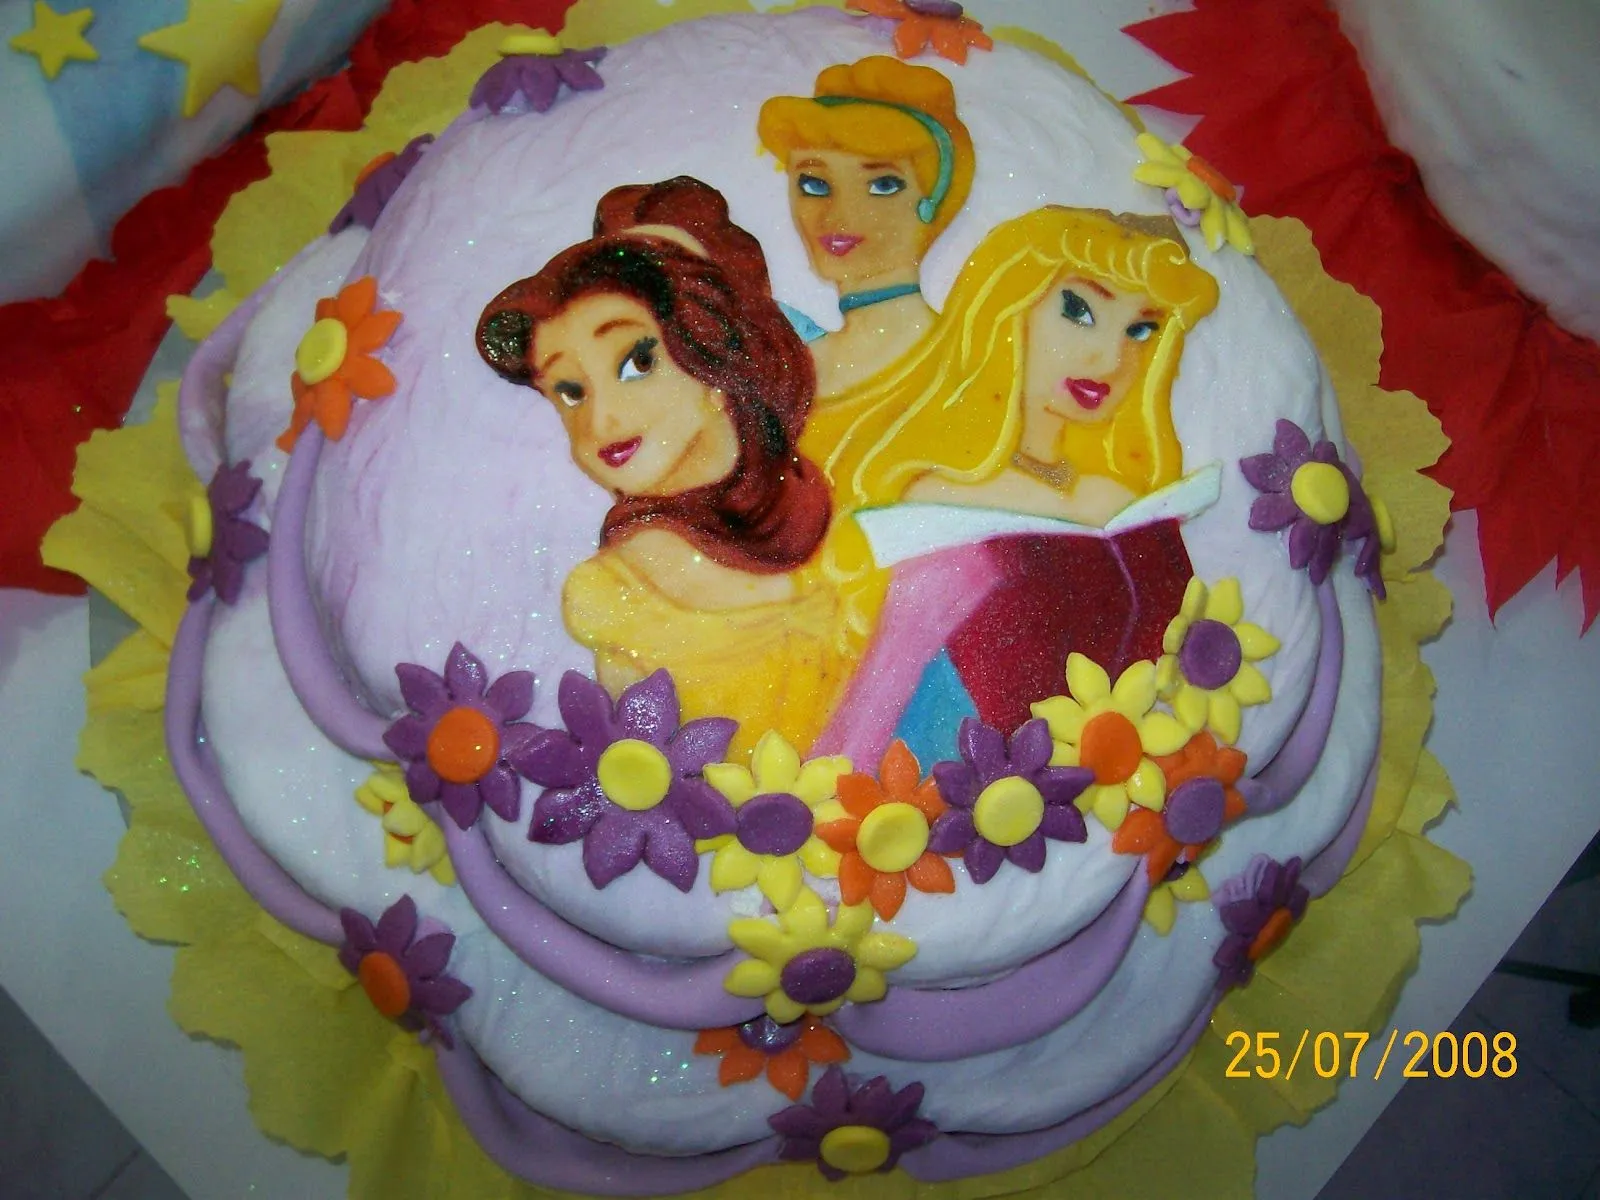 Tortas decoradas de las princesas de Disney - Imagui